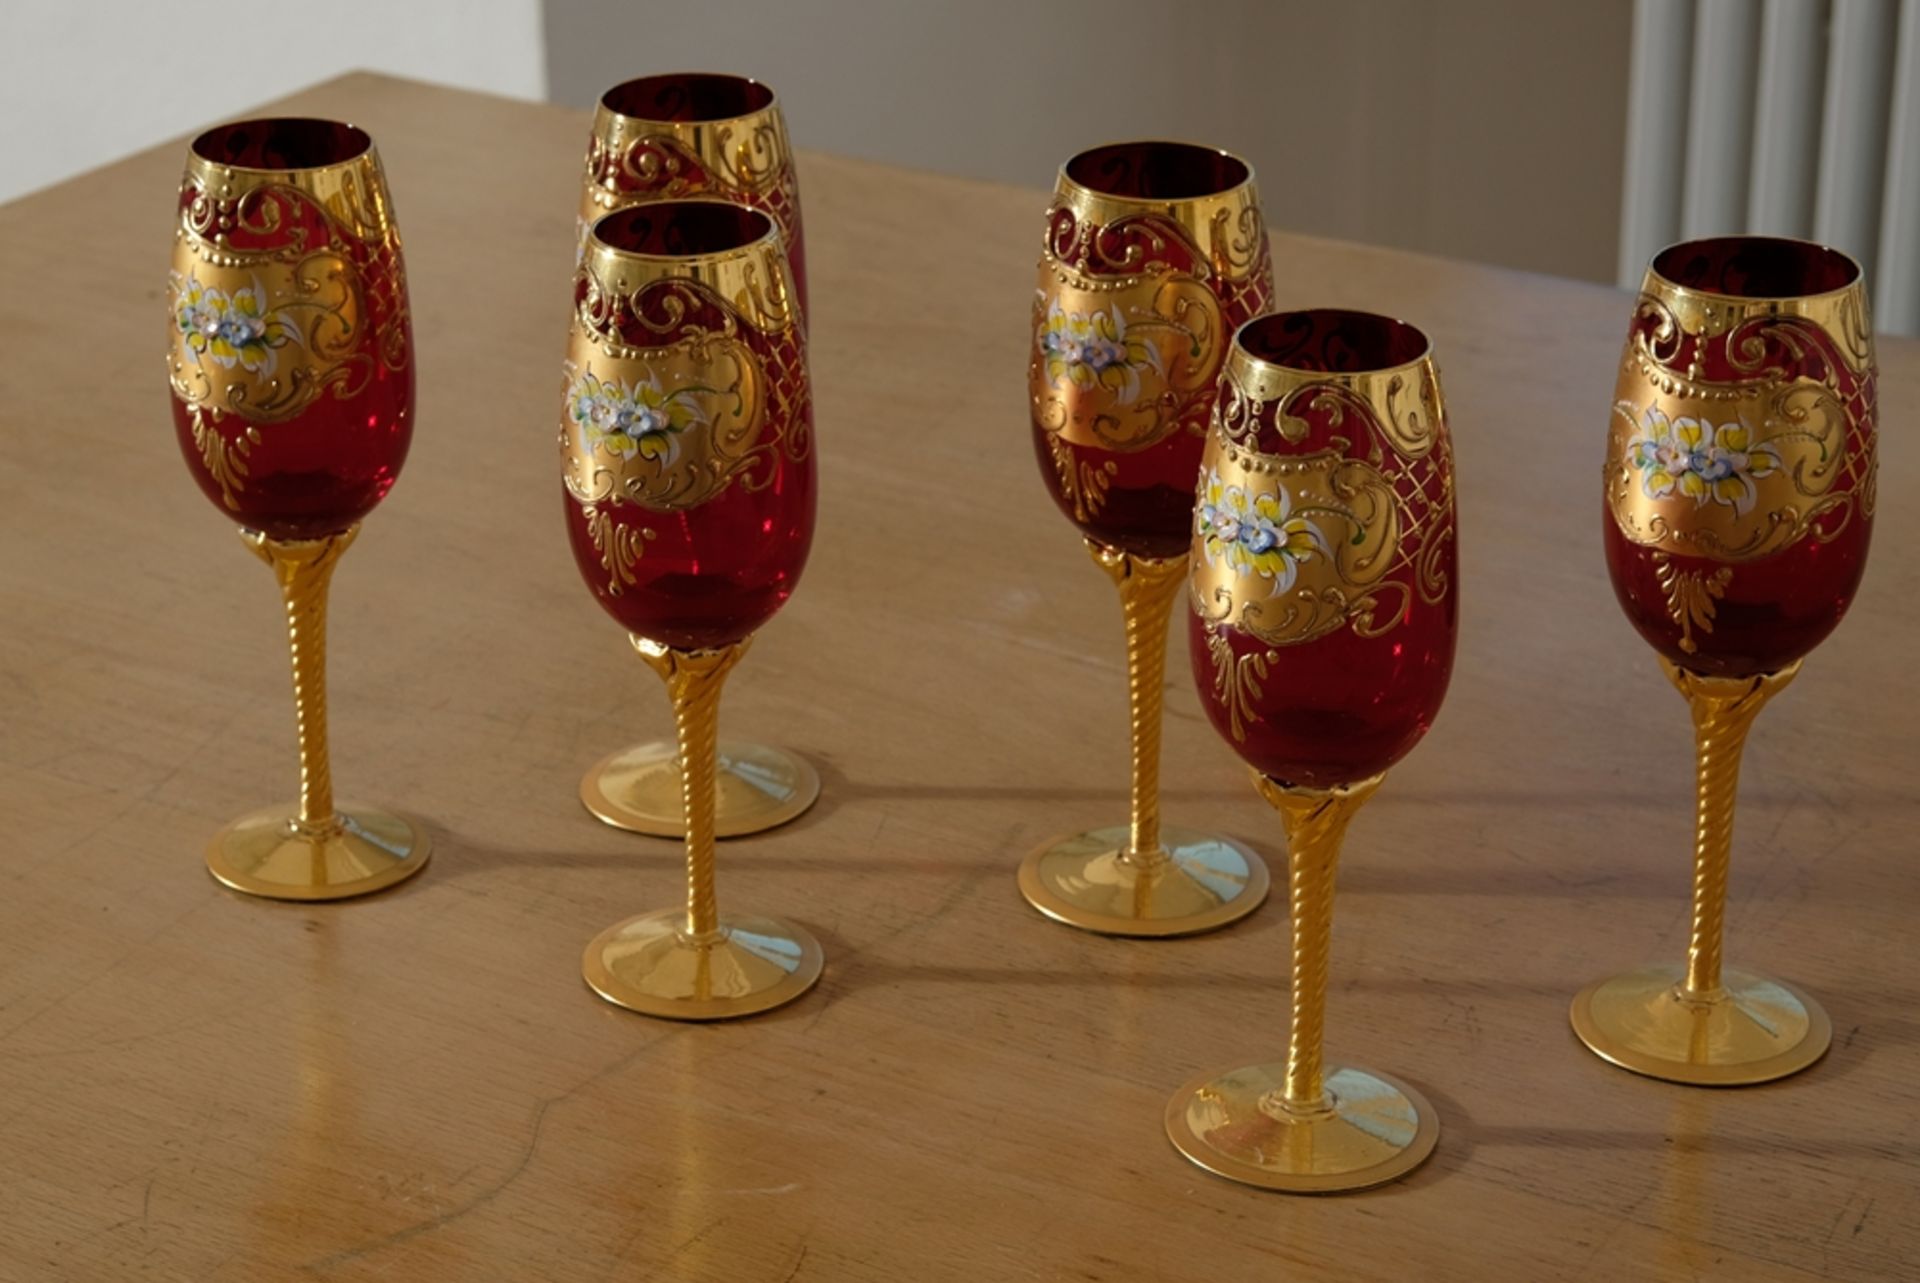 Six Murano wine glasses, Trefuochi, original Venetian wine glasses, ruby red glass, gold leaf ename - Image 2 of 3